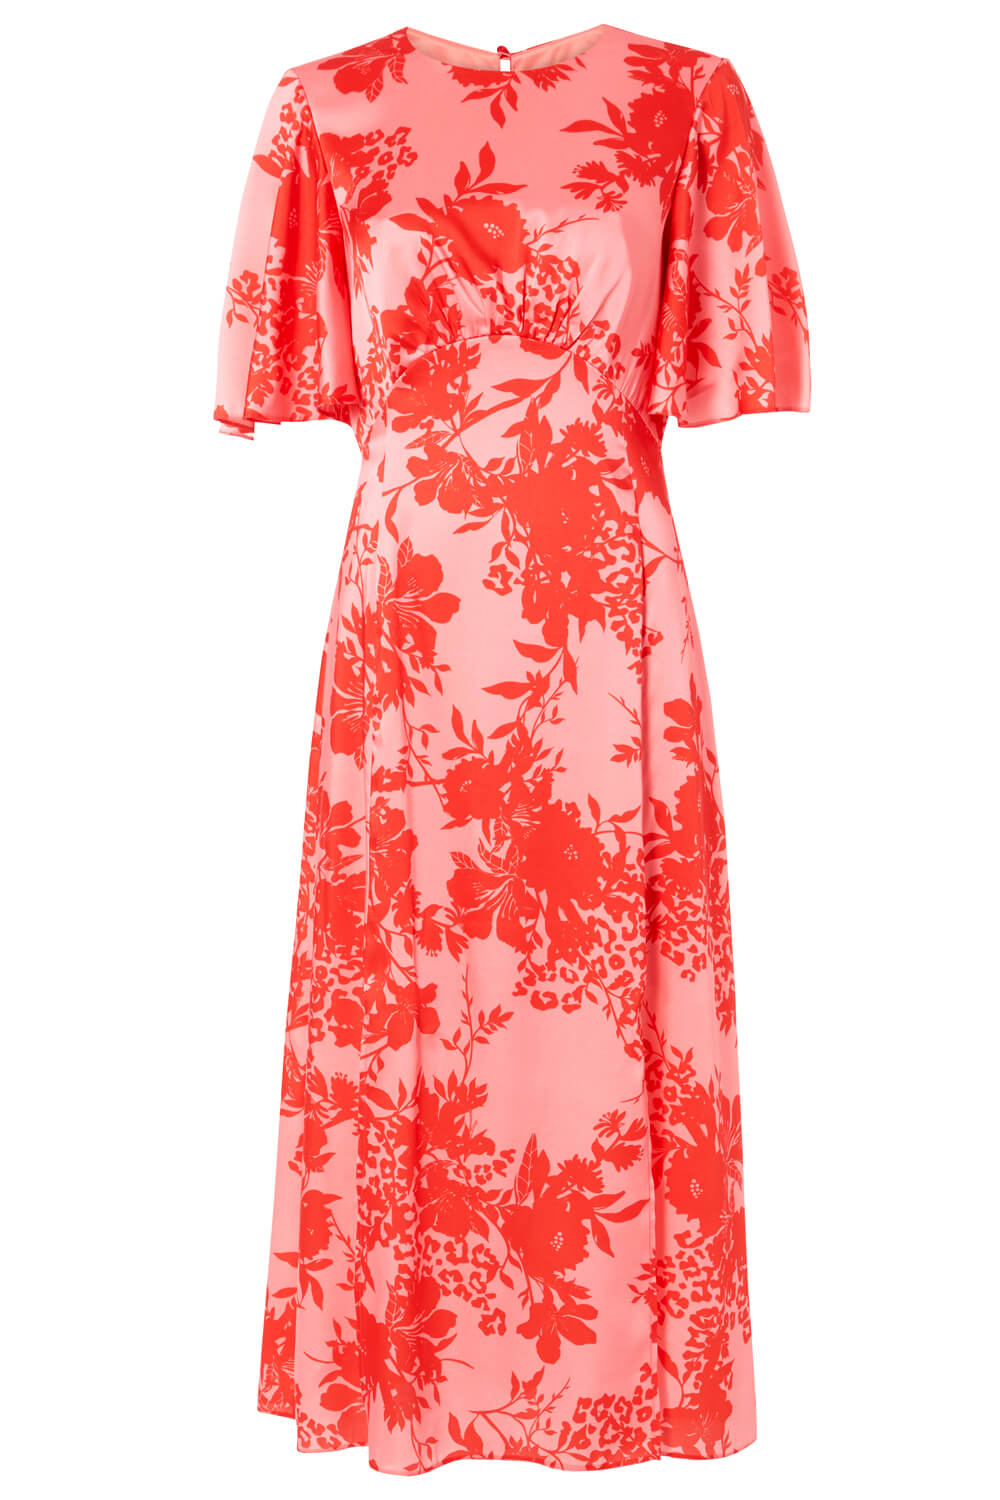 PINK Floral Print Oriental Midi Dress, Image 4 of 4